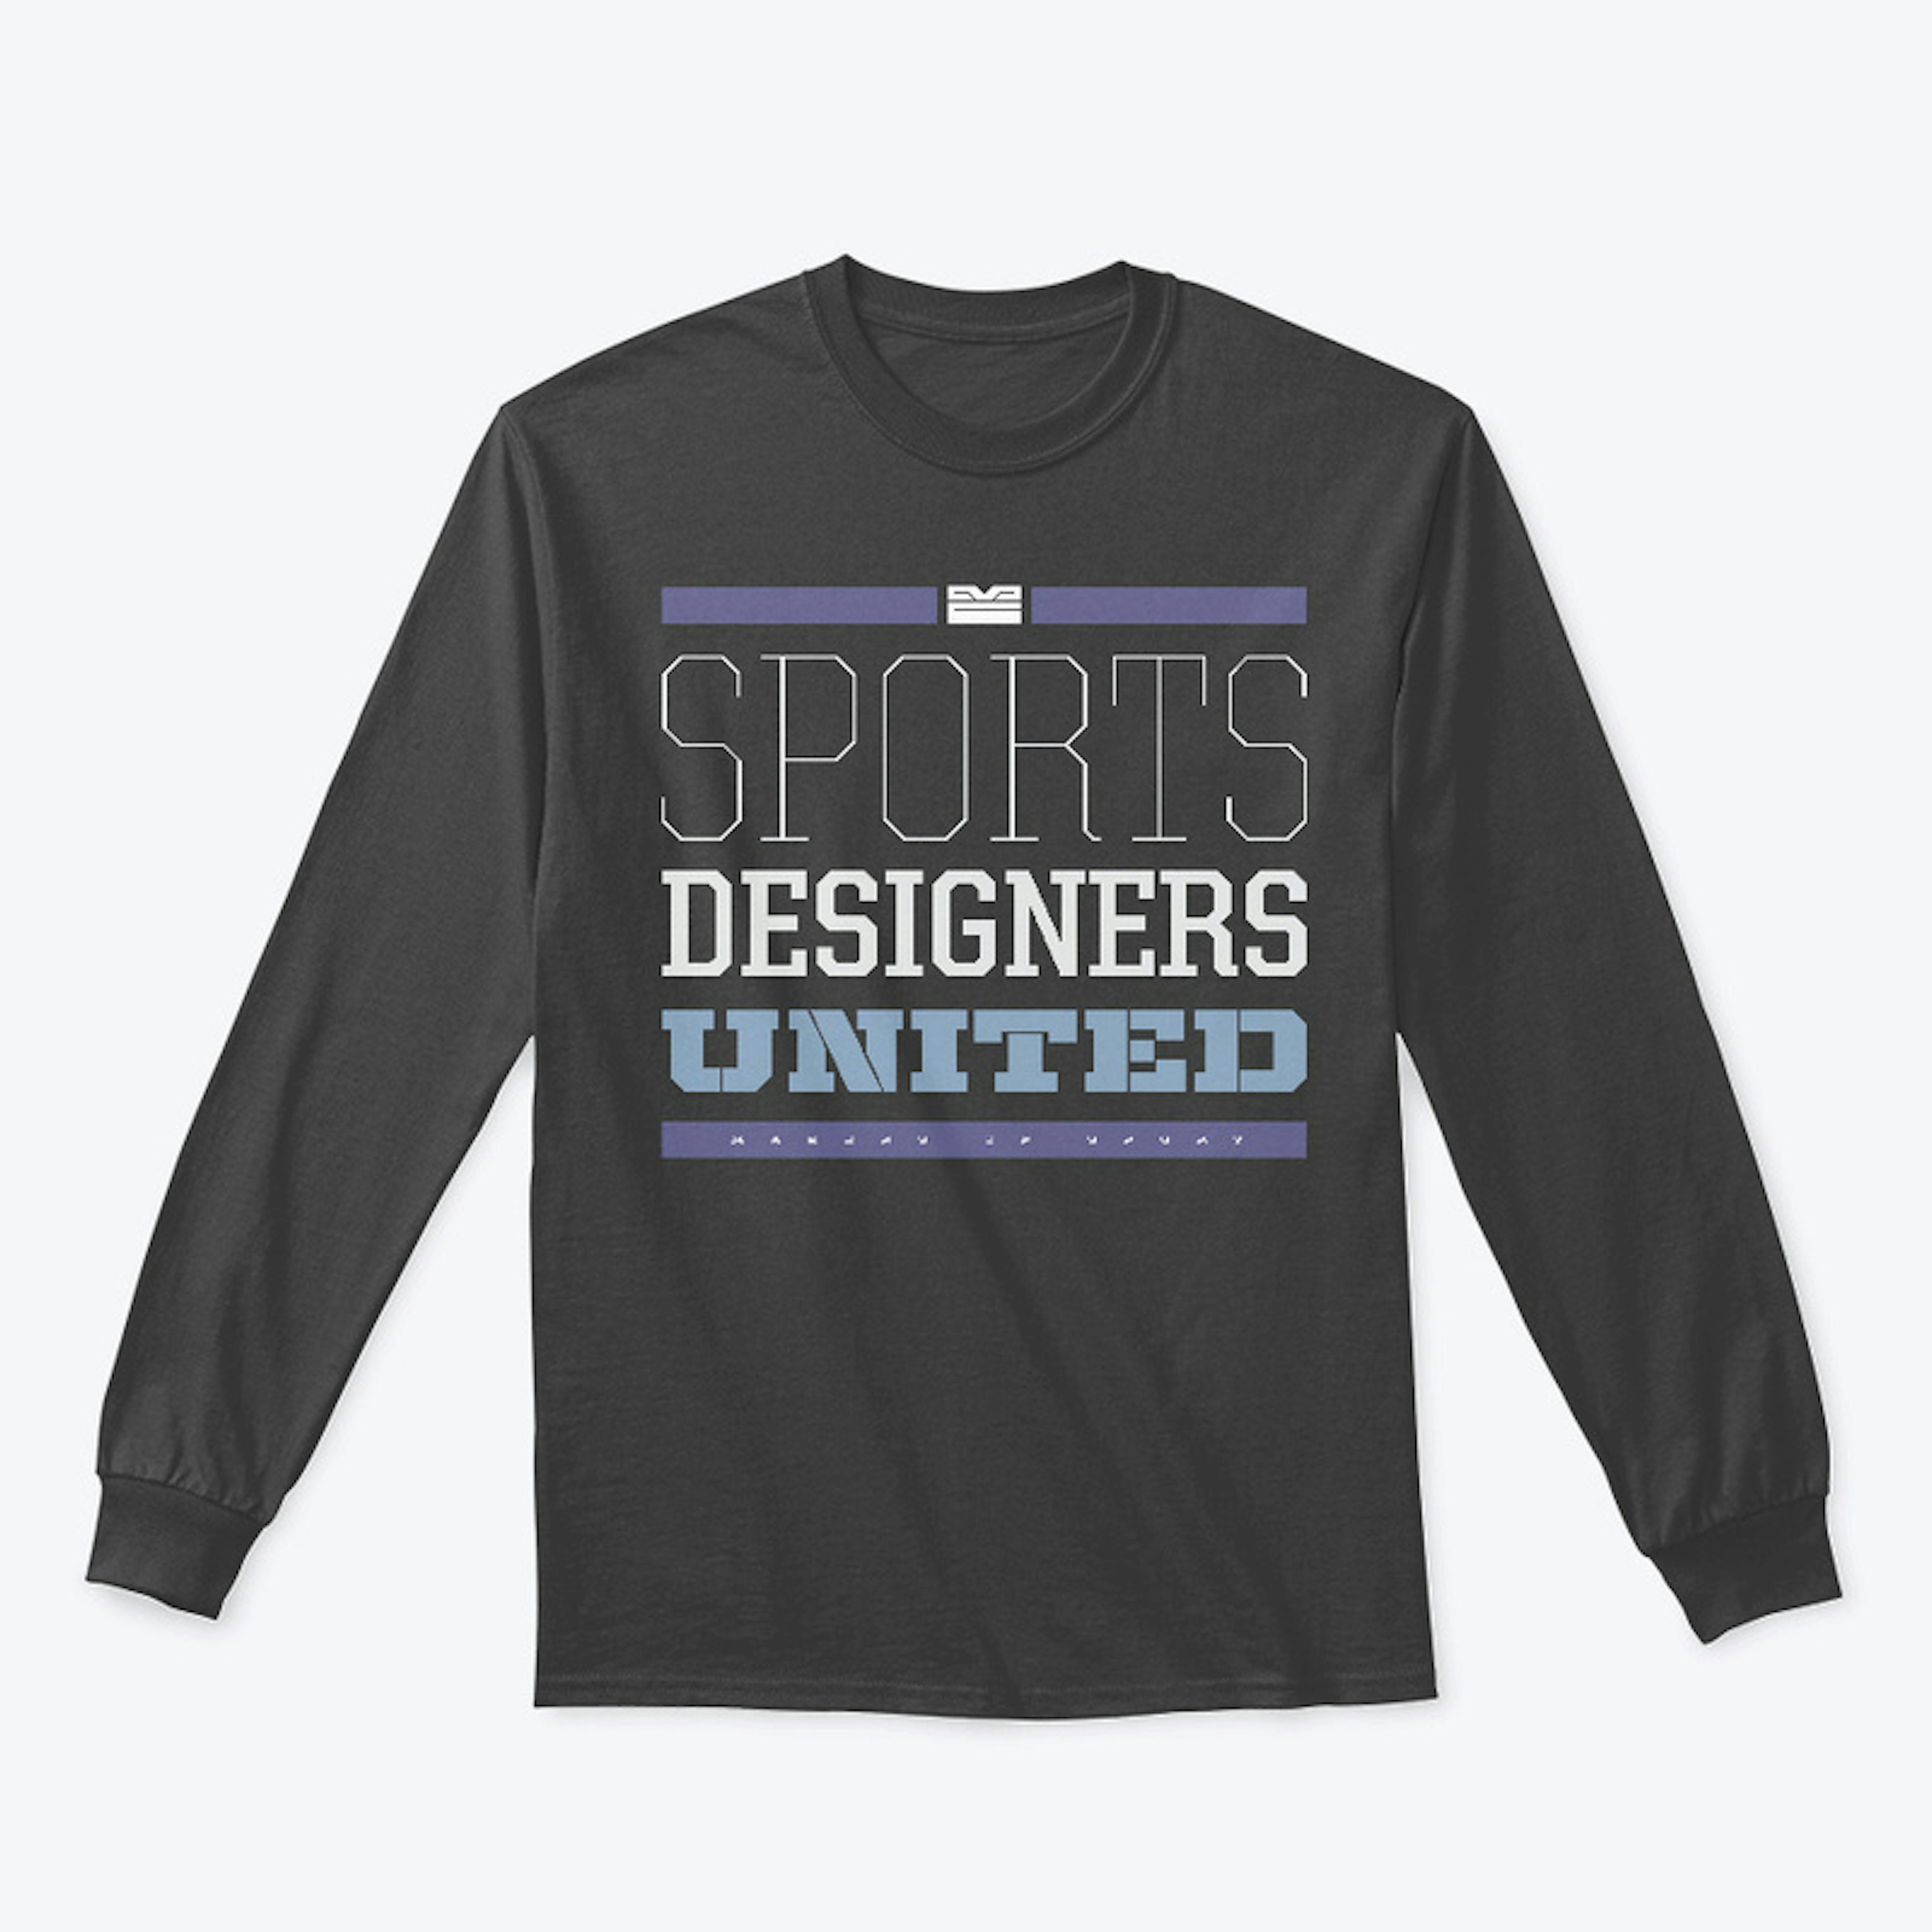 "Sports Designers United" Shirt